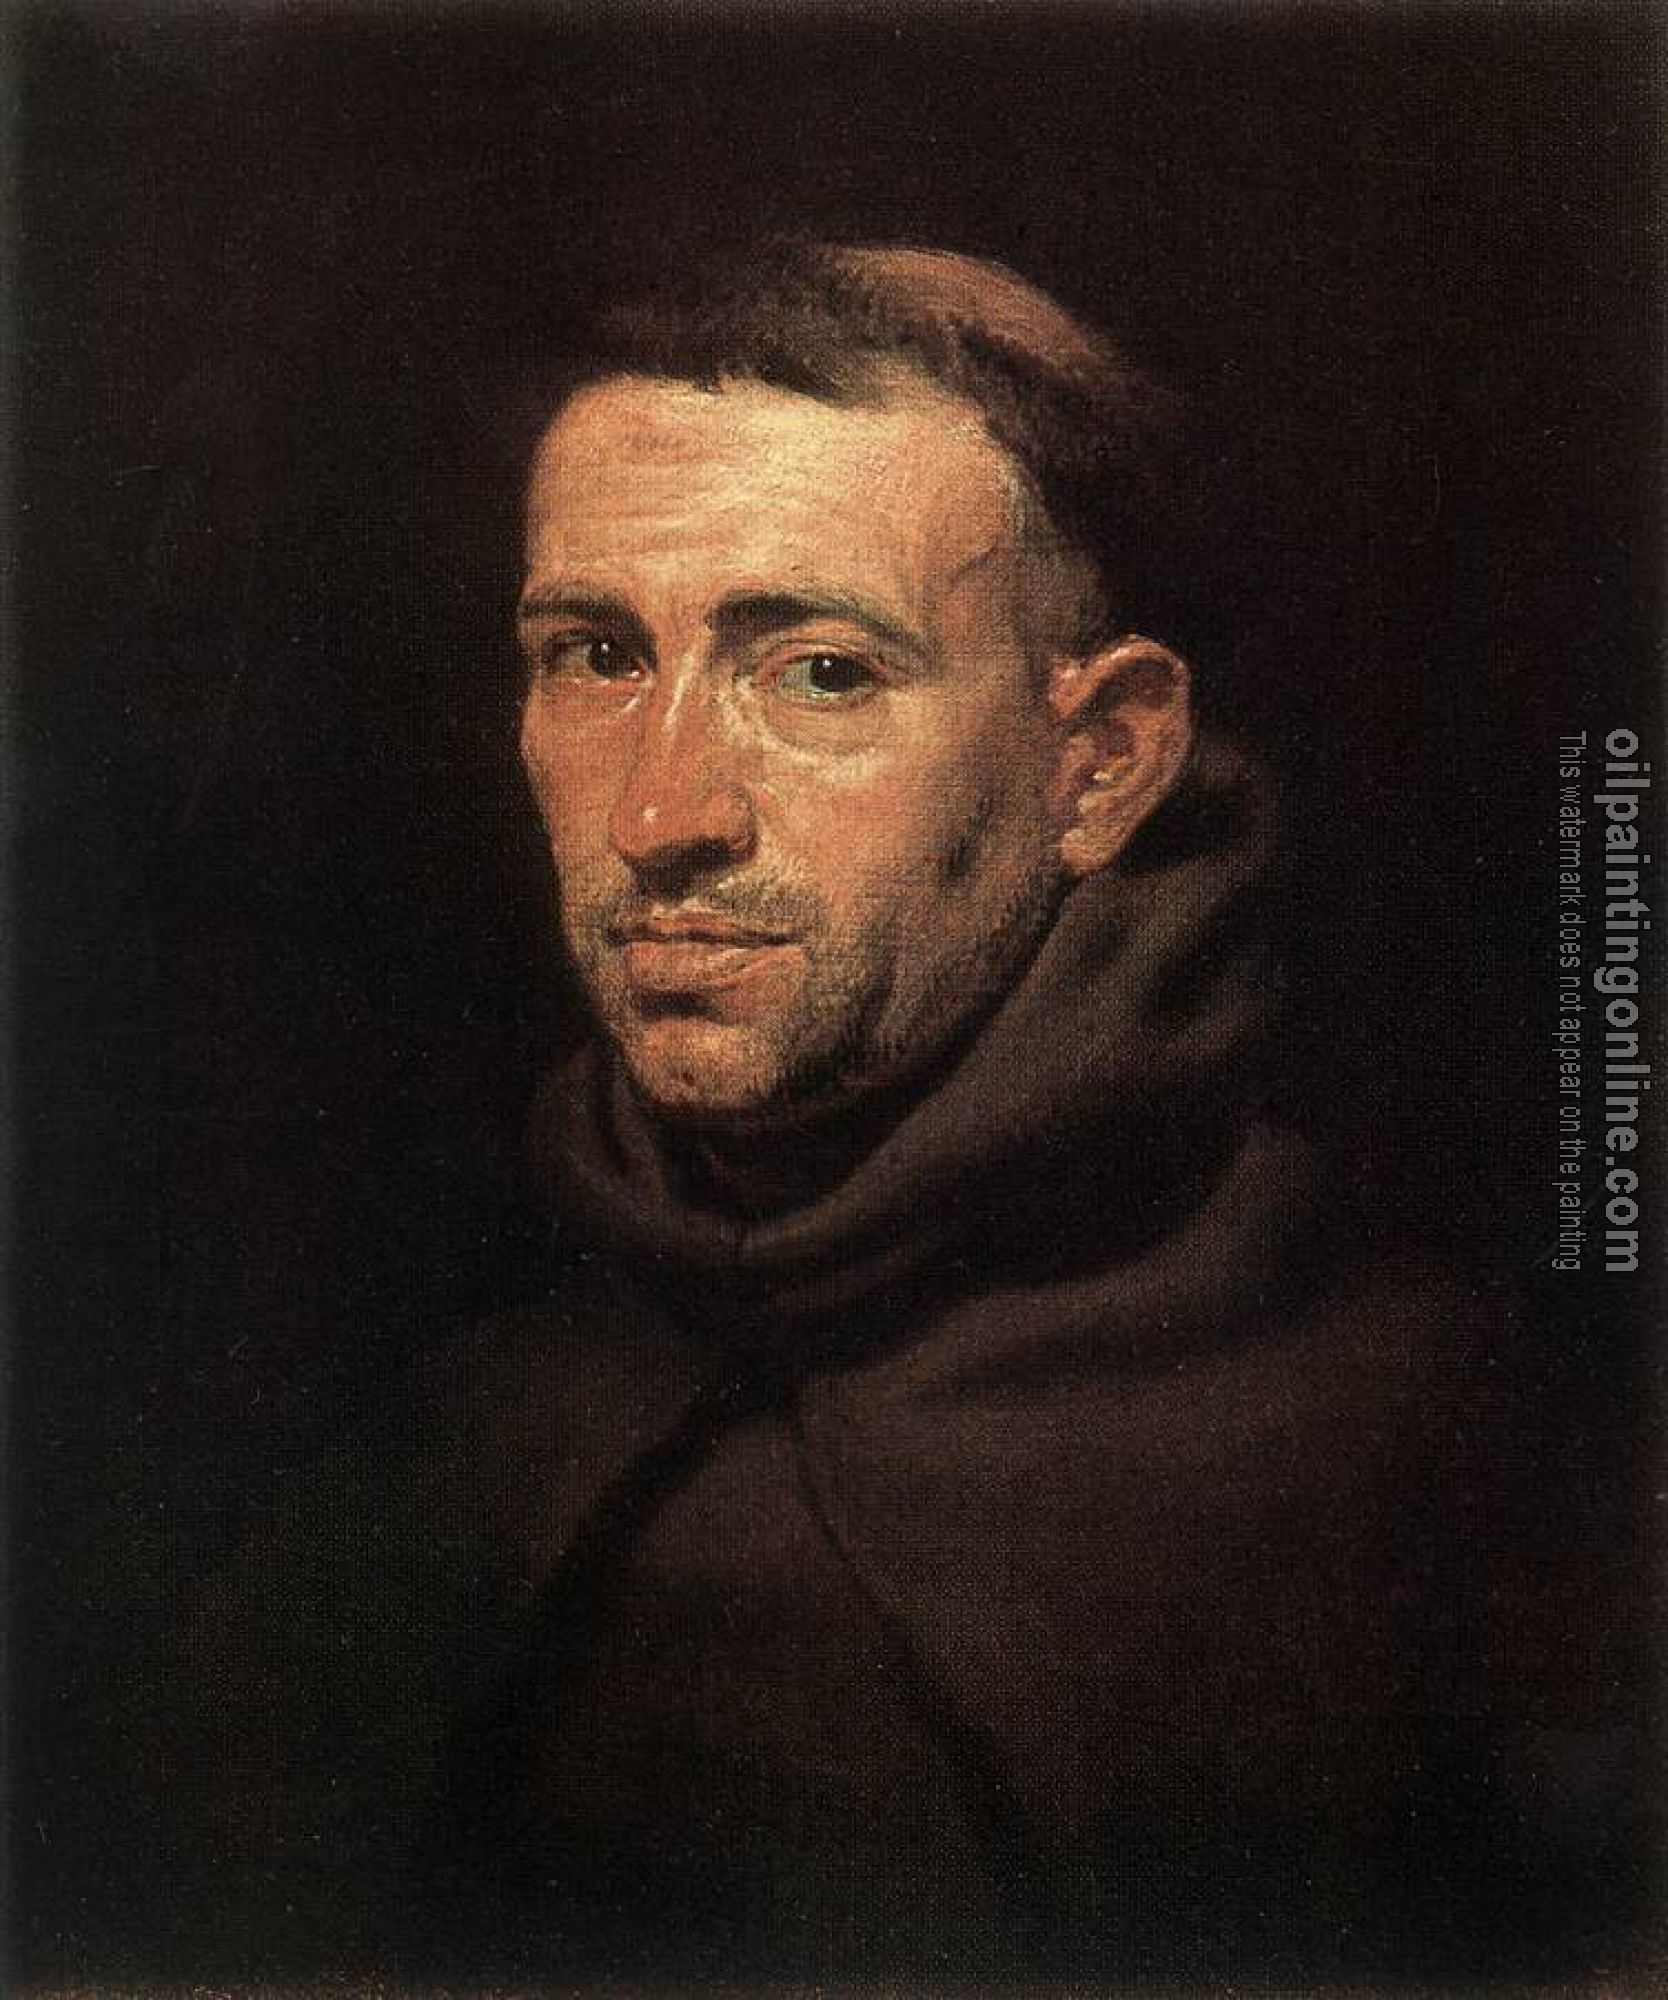 Rubens, Peter Paul - Head of a Franciscan Friar